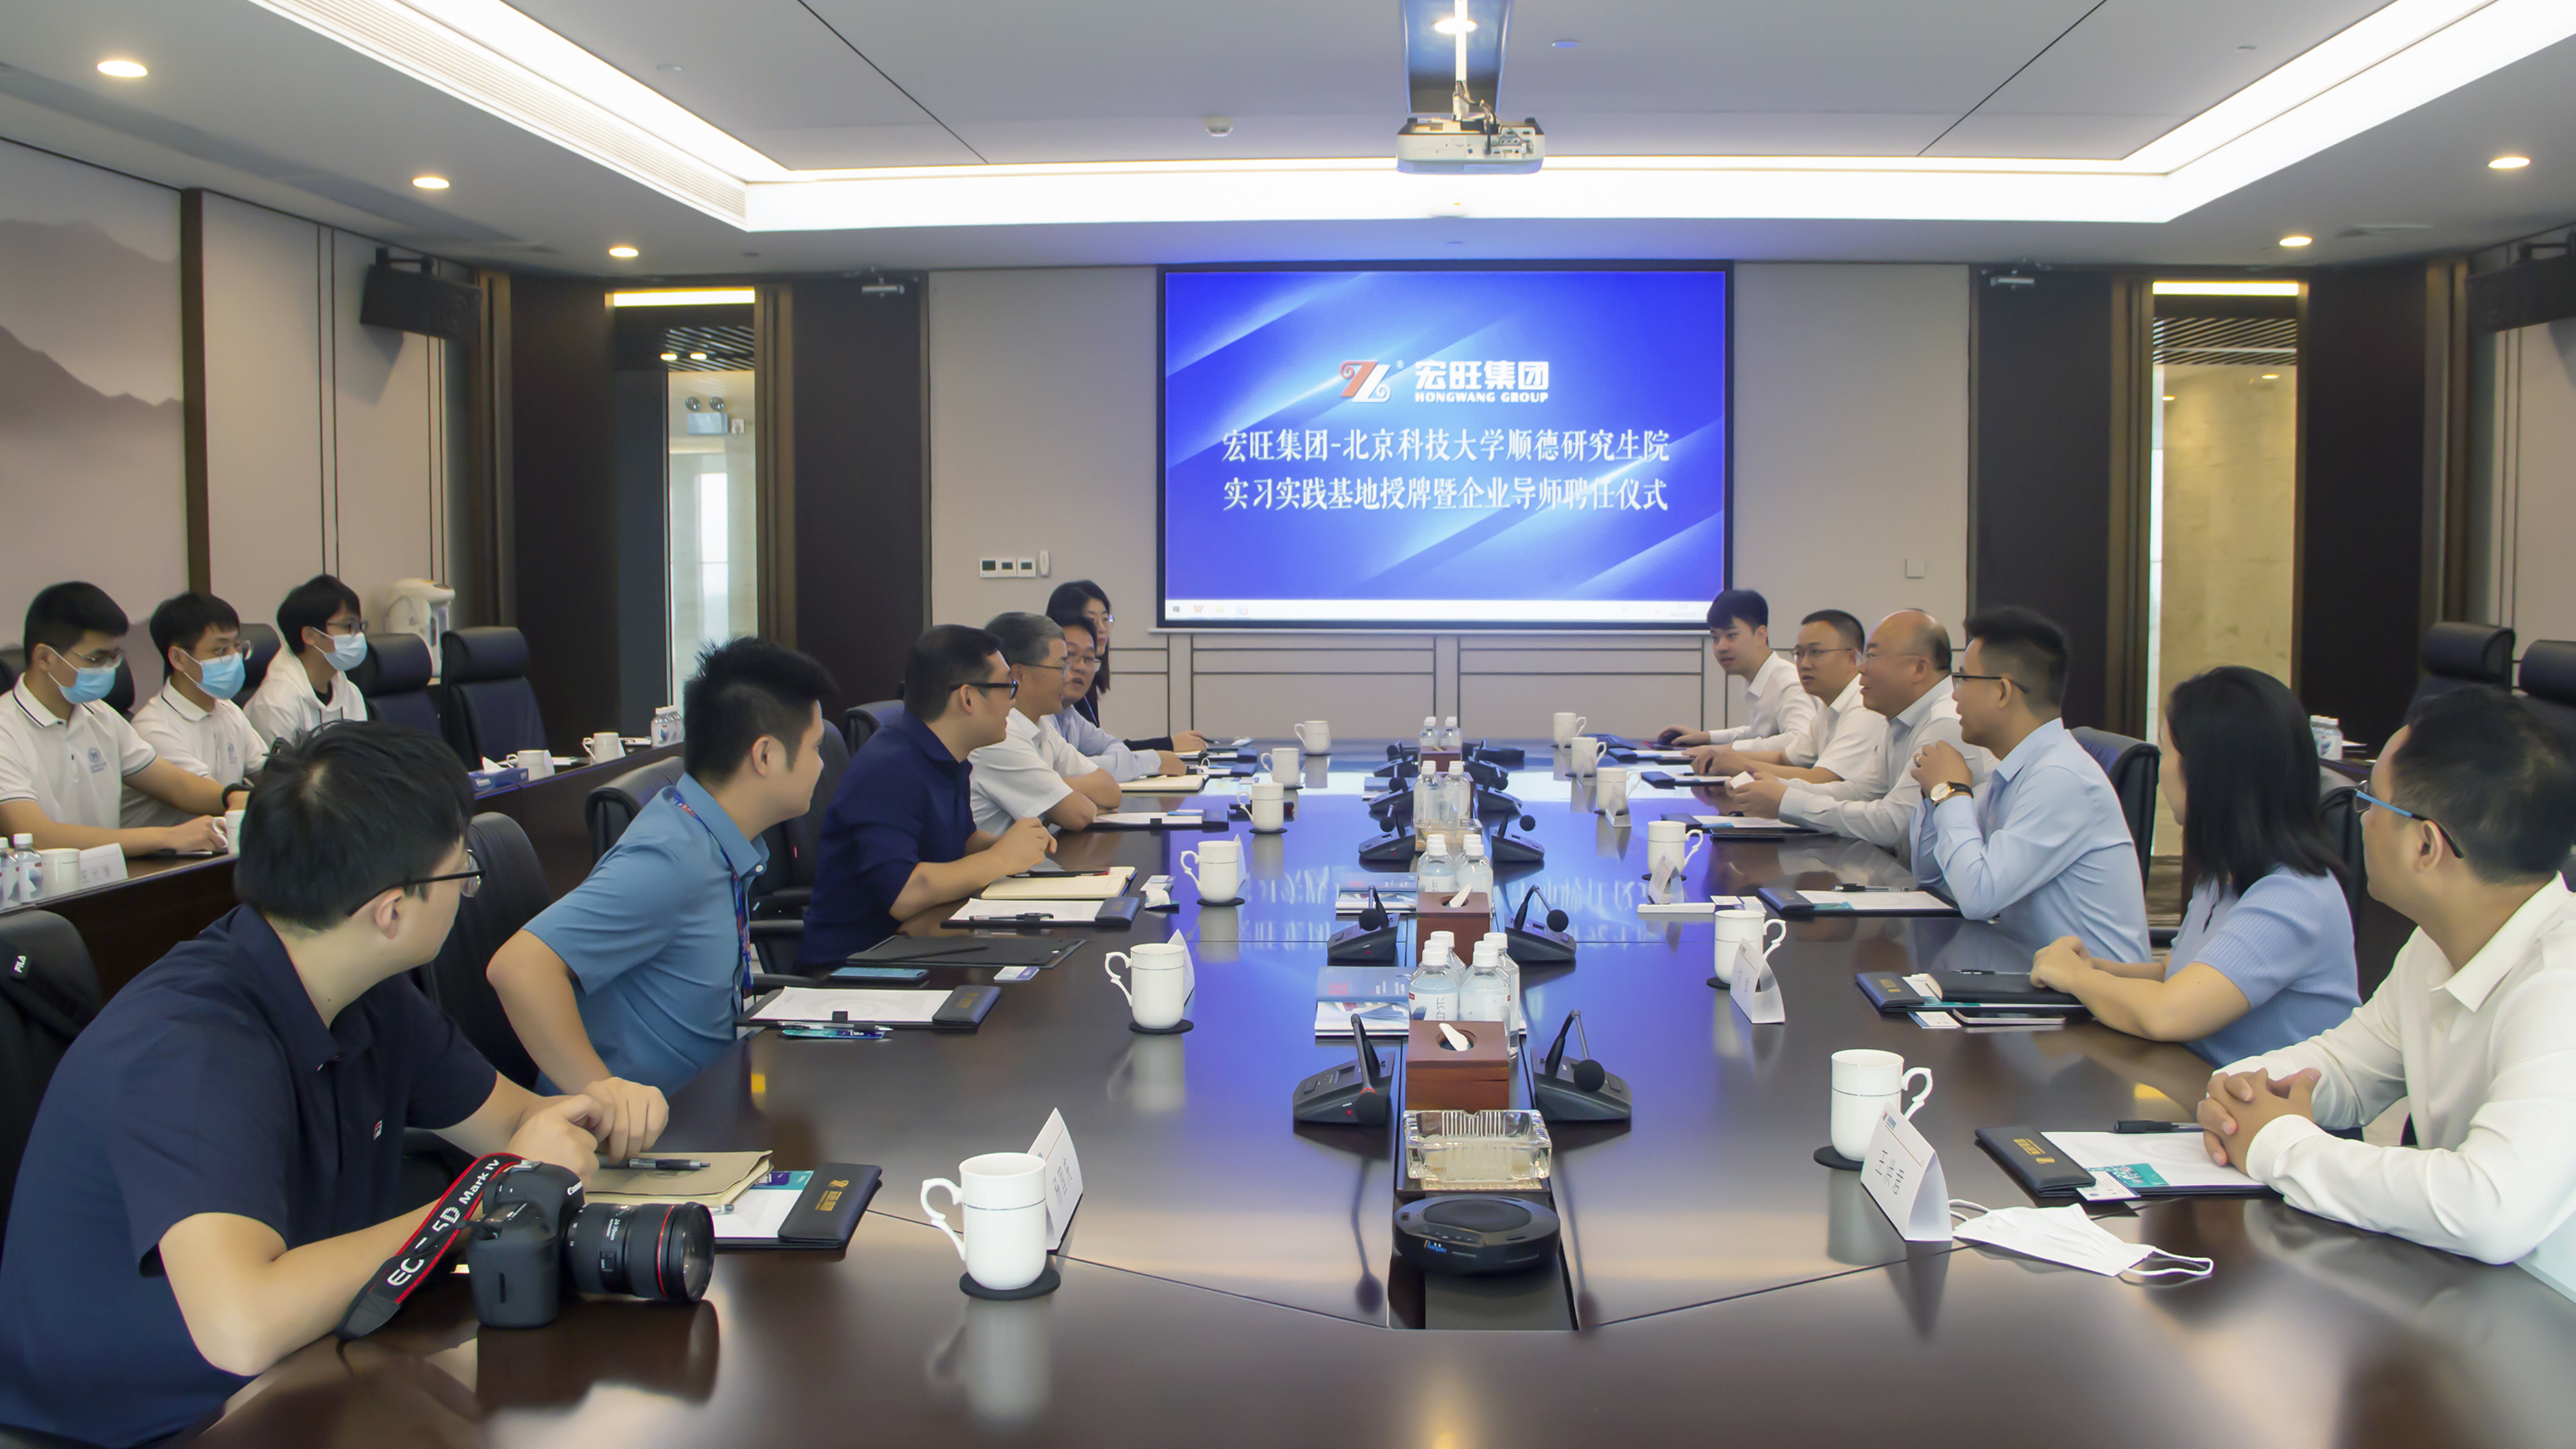 Hongwang Group-Shunde Graduate School of University of Science and Technology Beijing held a school-enterprise exchange forum